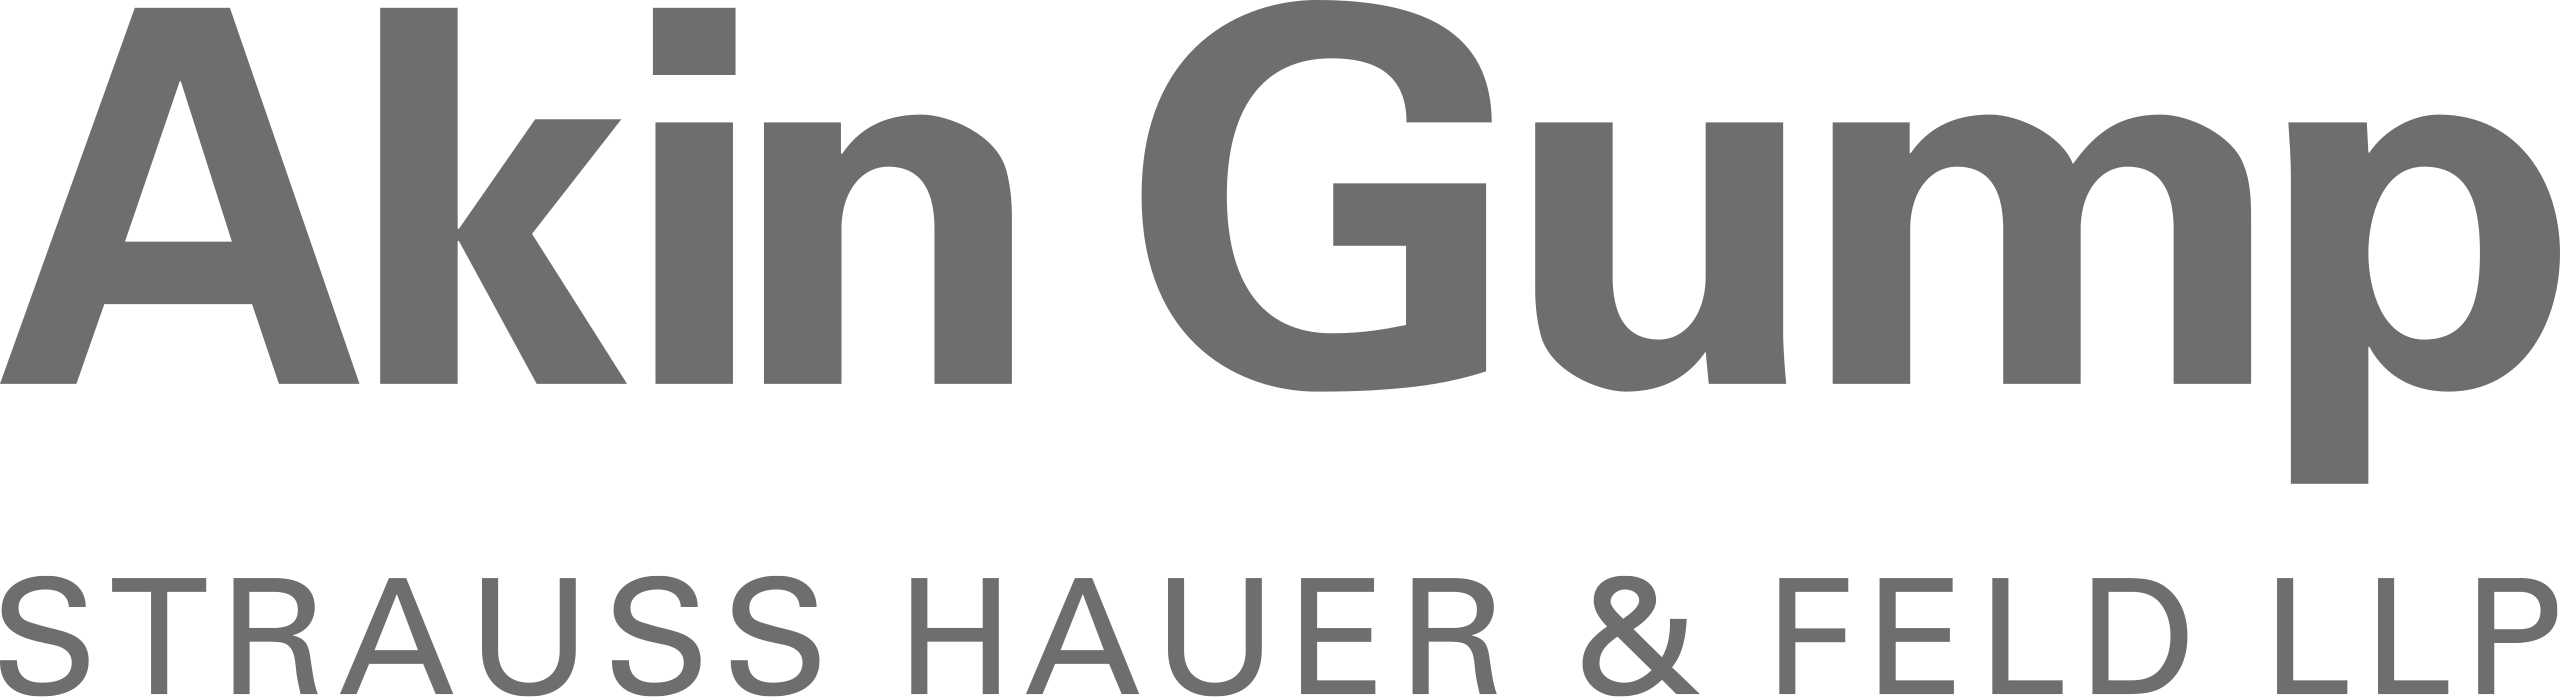 Akin_Gump_Strauss_Hauer_&_Feld_LLP_logo.svg